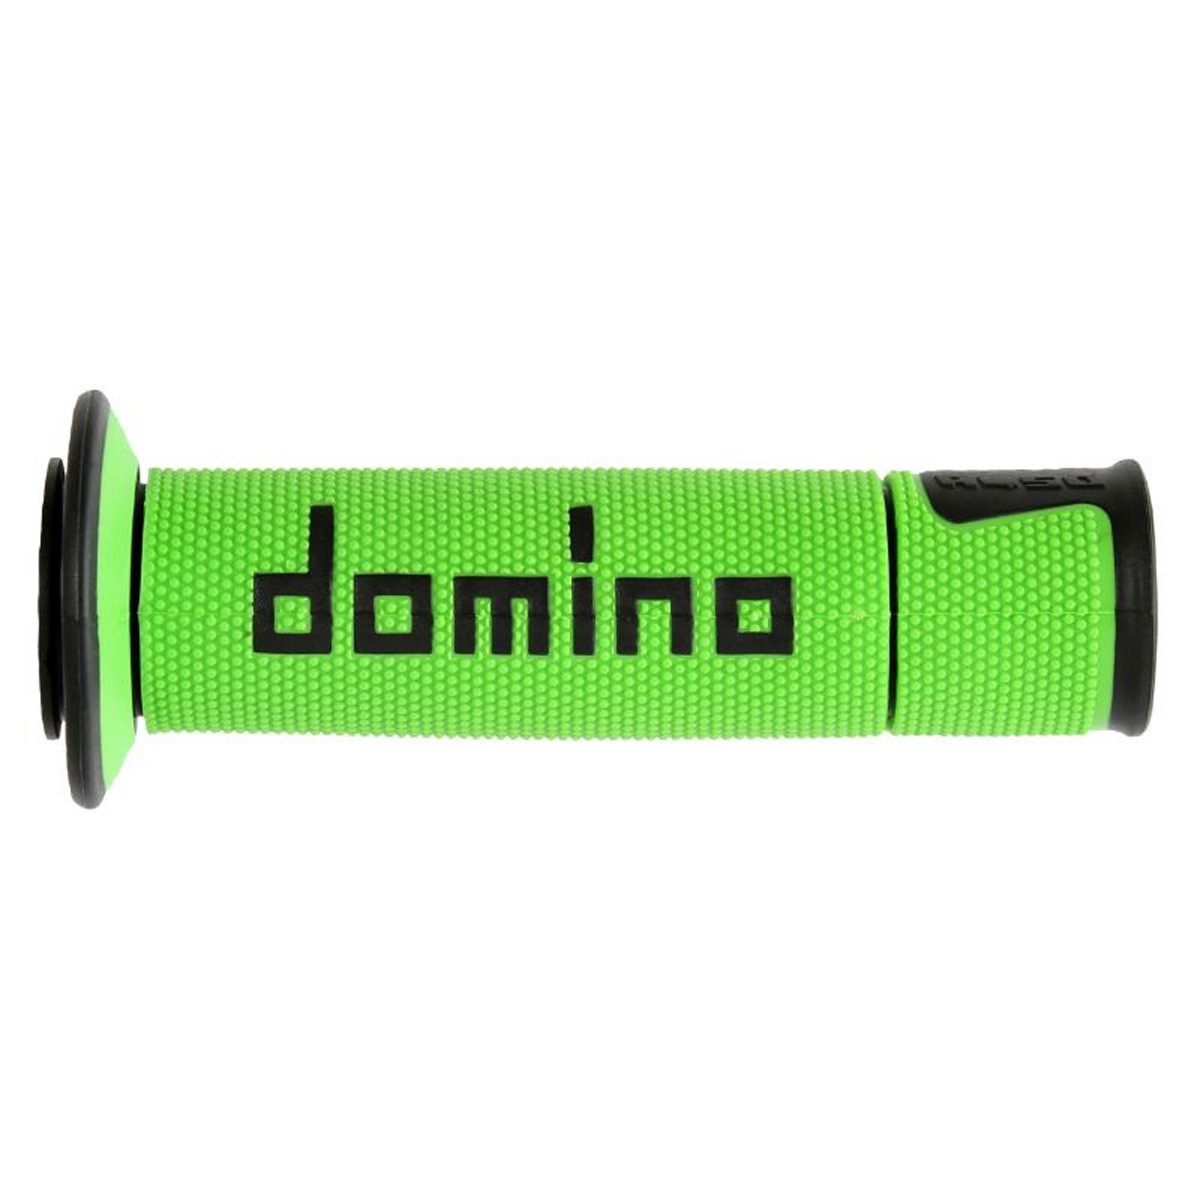 Par Puños Manillar - Domino - Moto On Road Open End A450 Gris / Amarillo  /// en Stock en BIXESS™